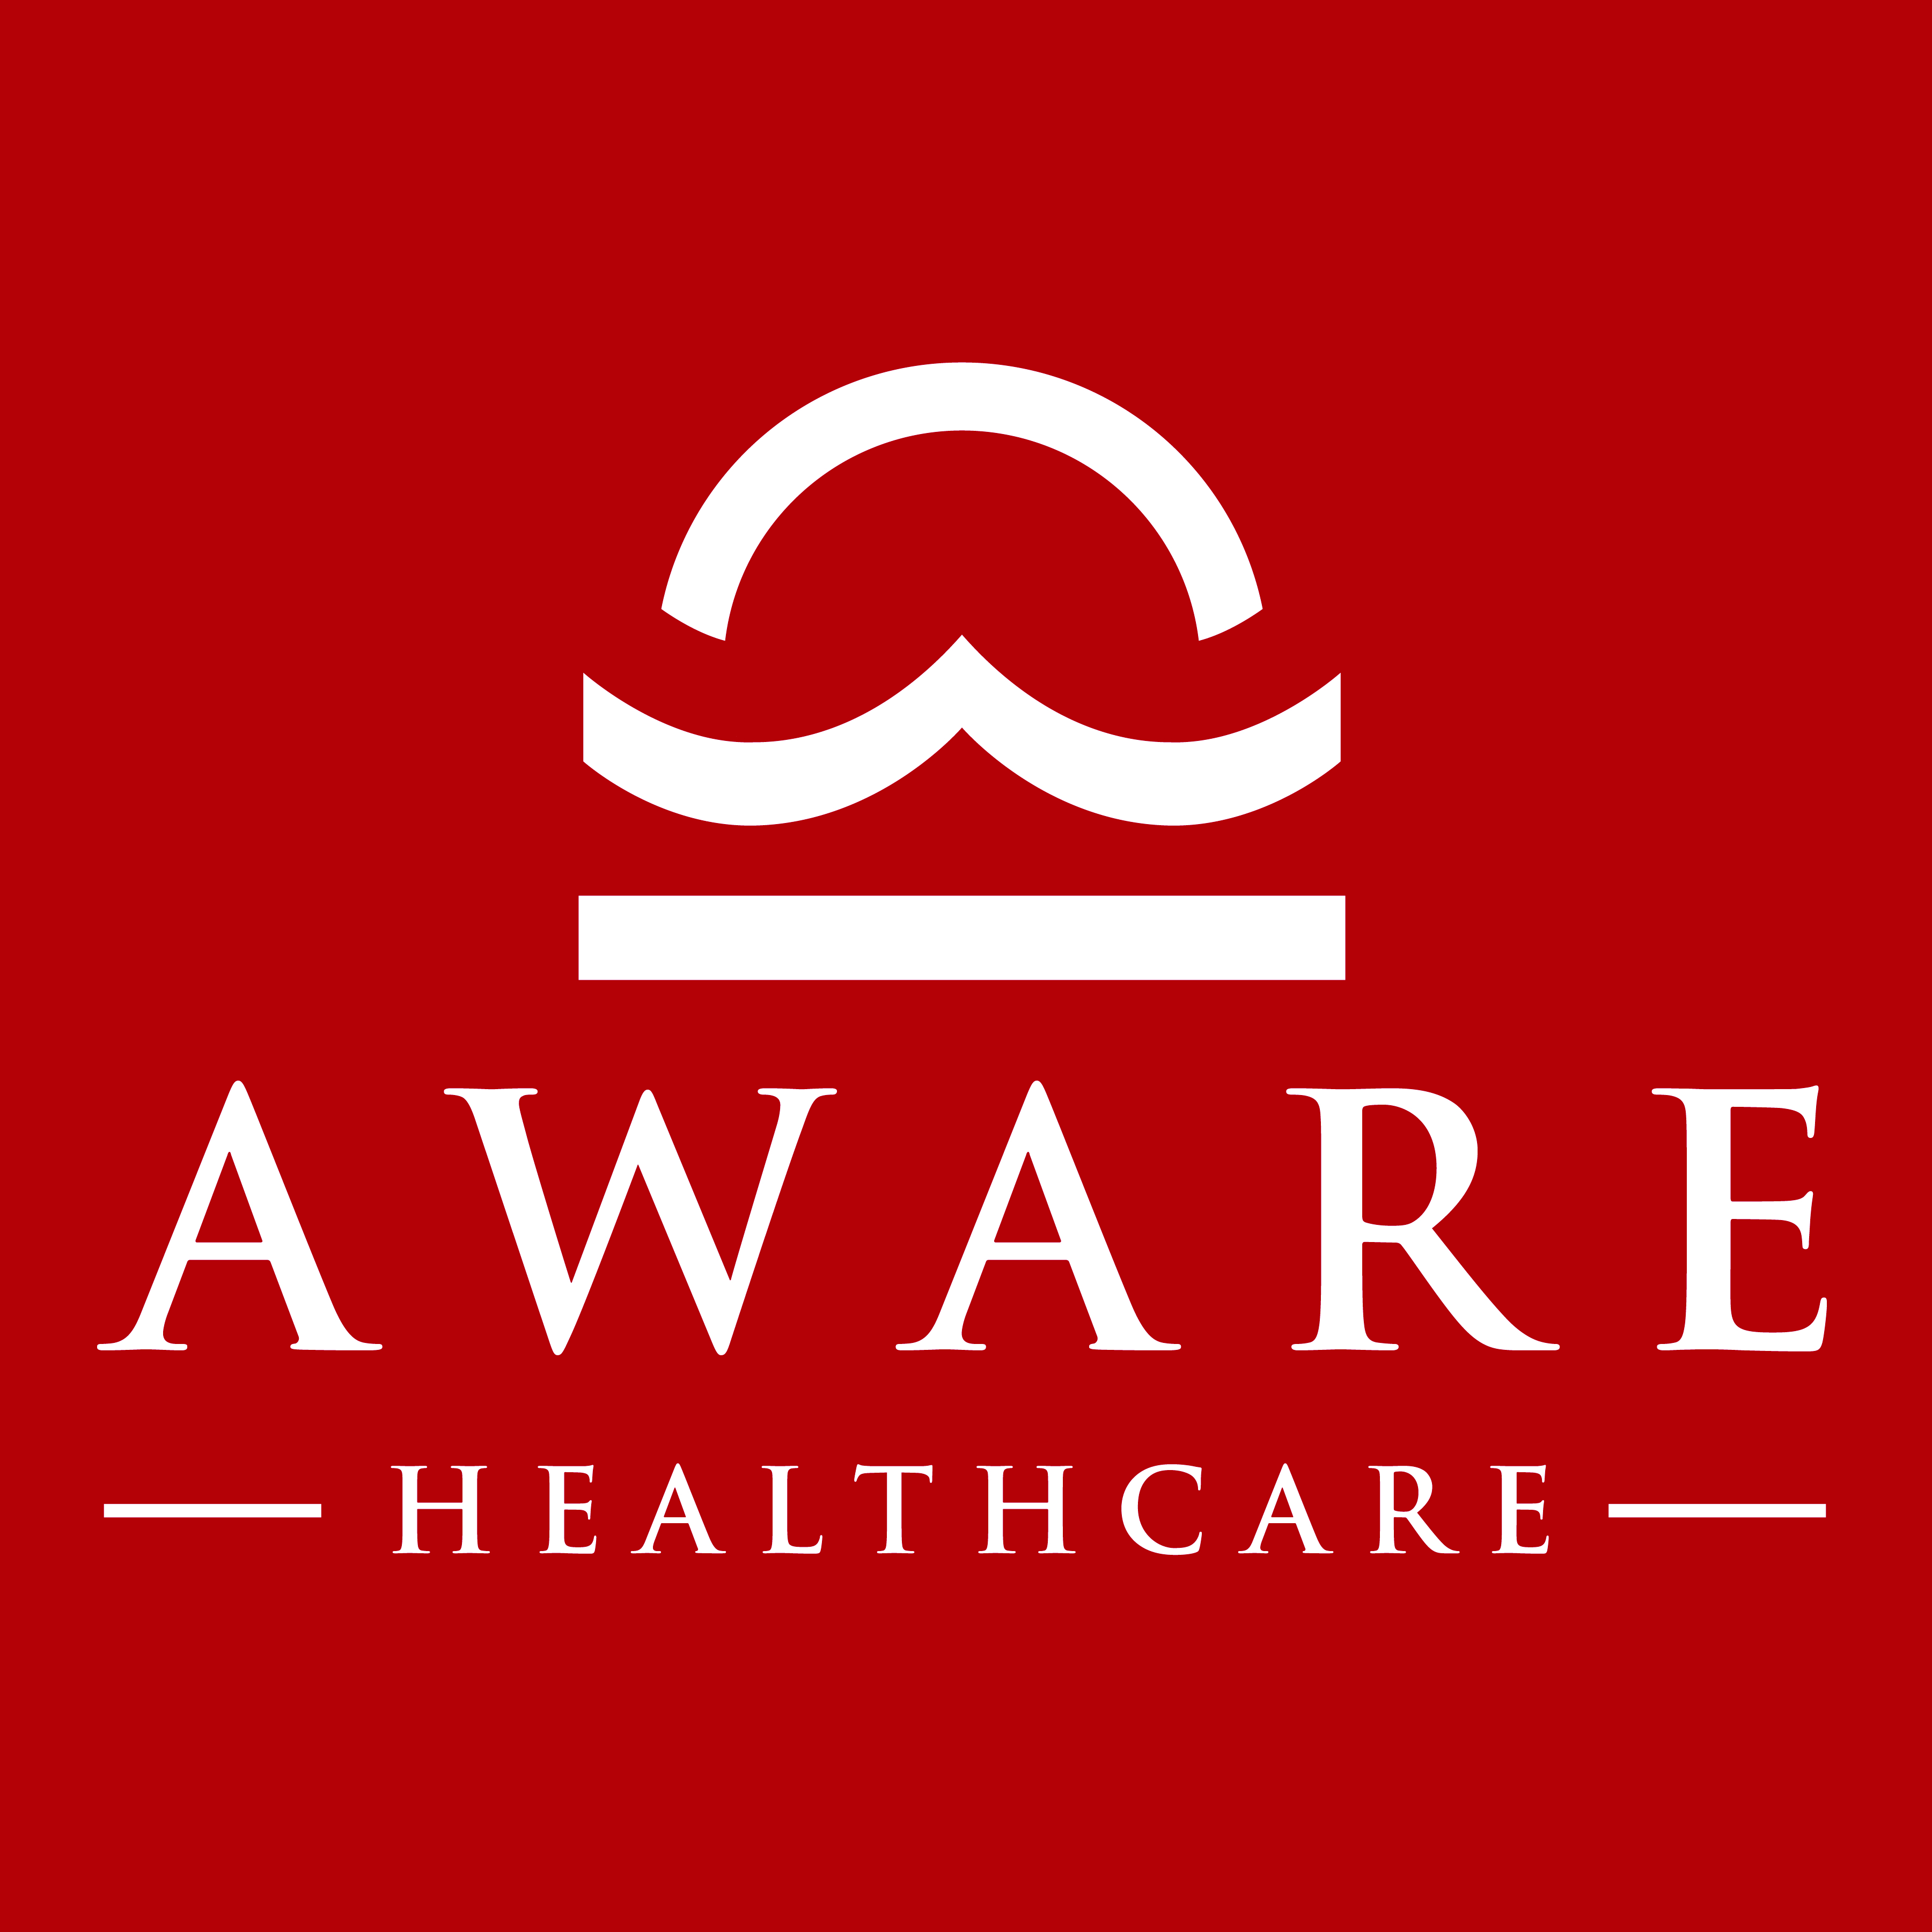 Aware Healthcare